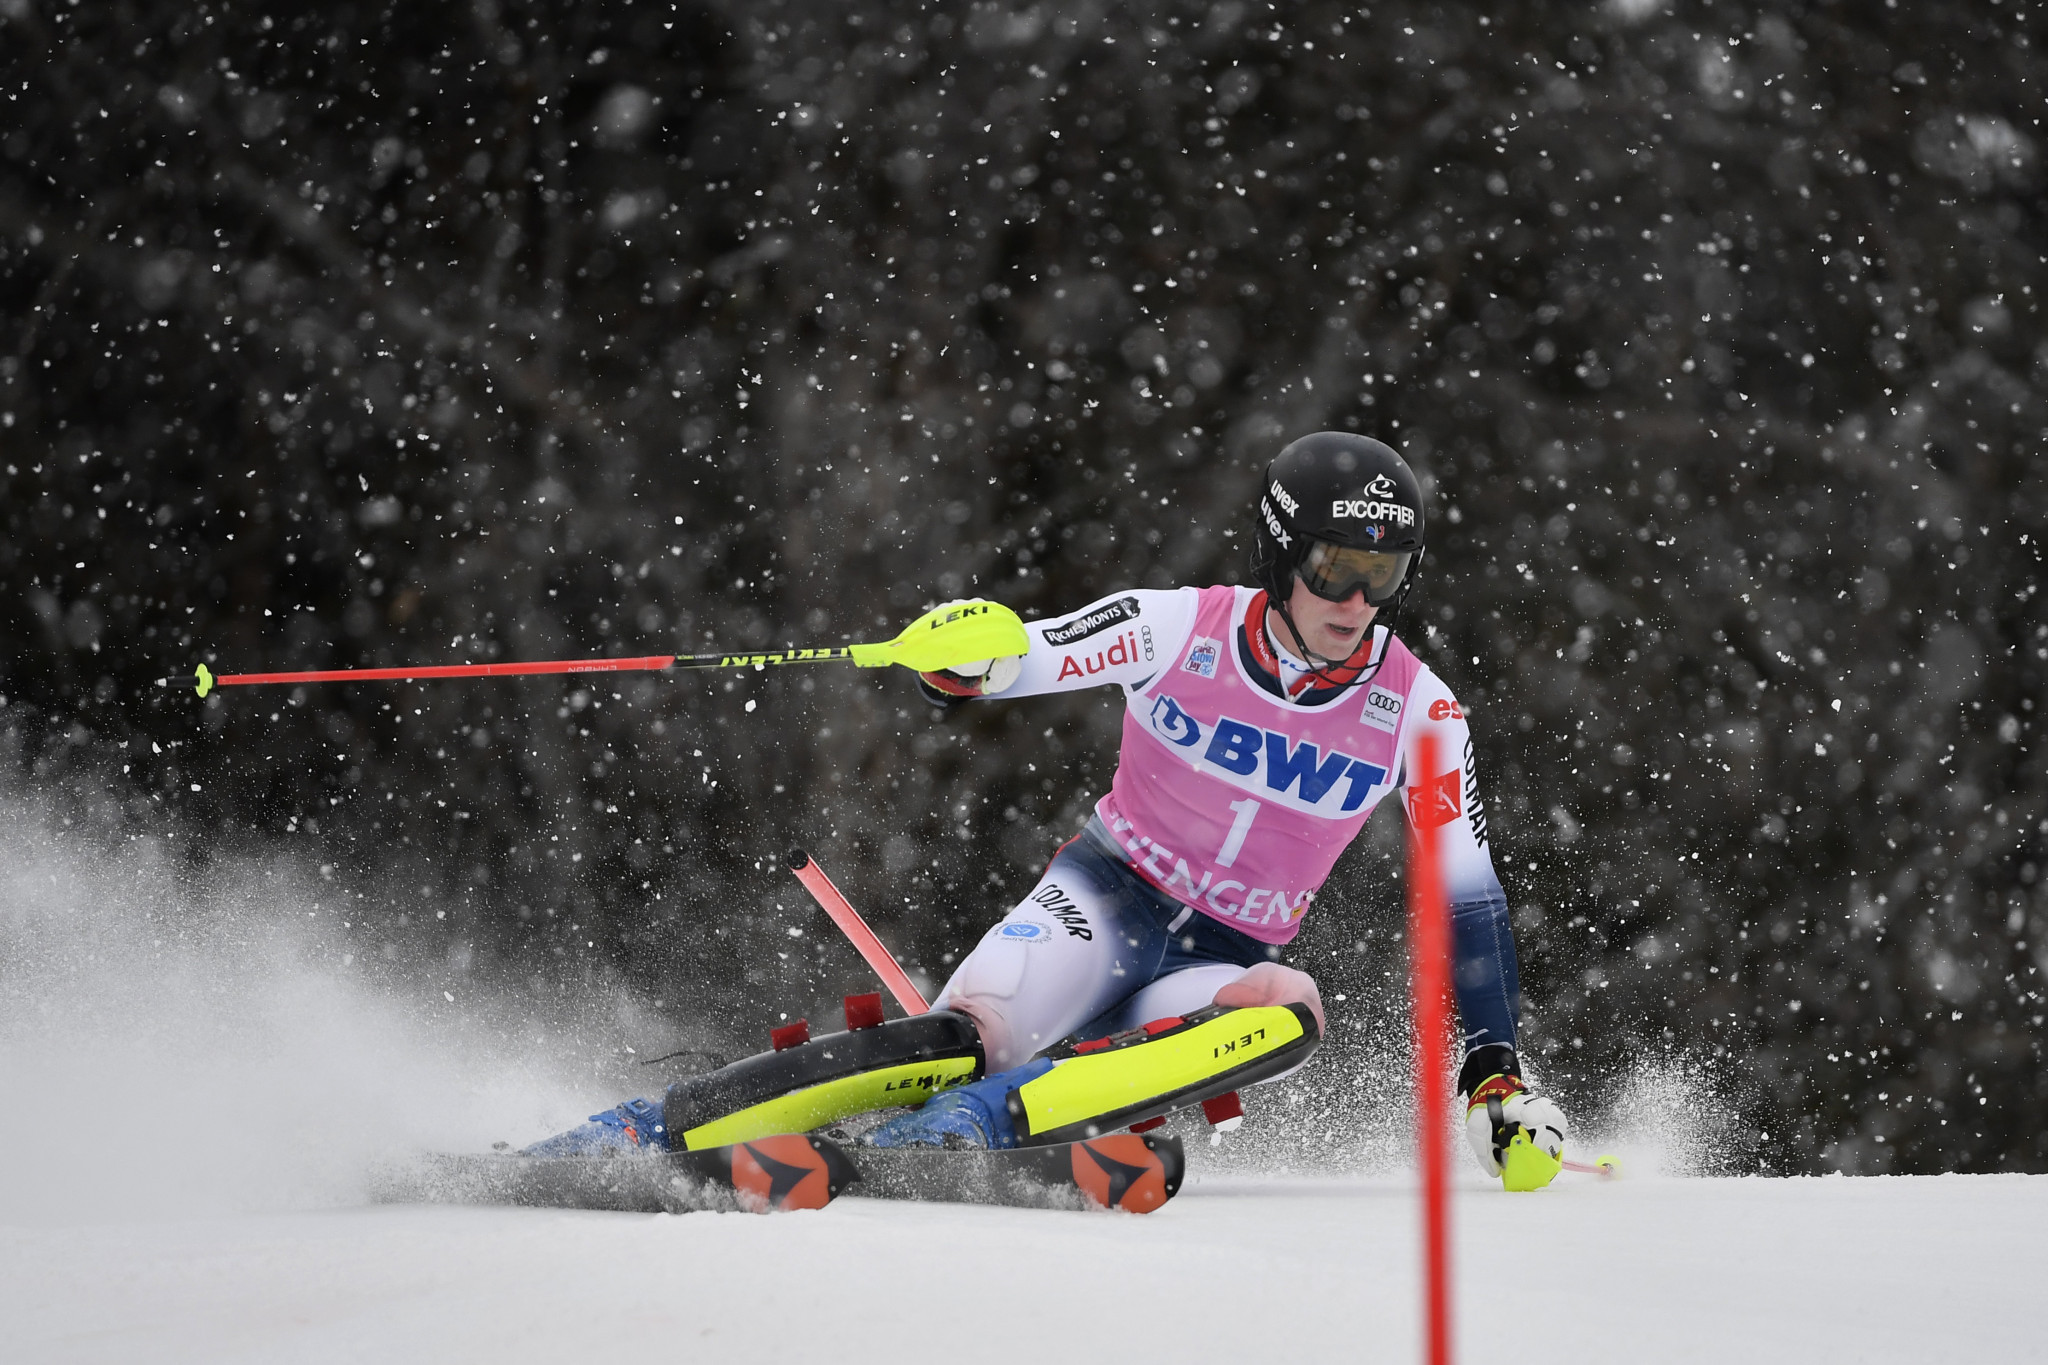 Noel triumphs again at FIS Alpine Ski World Cup slalom in Wengen